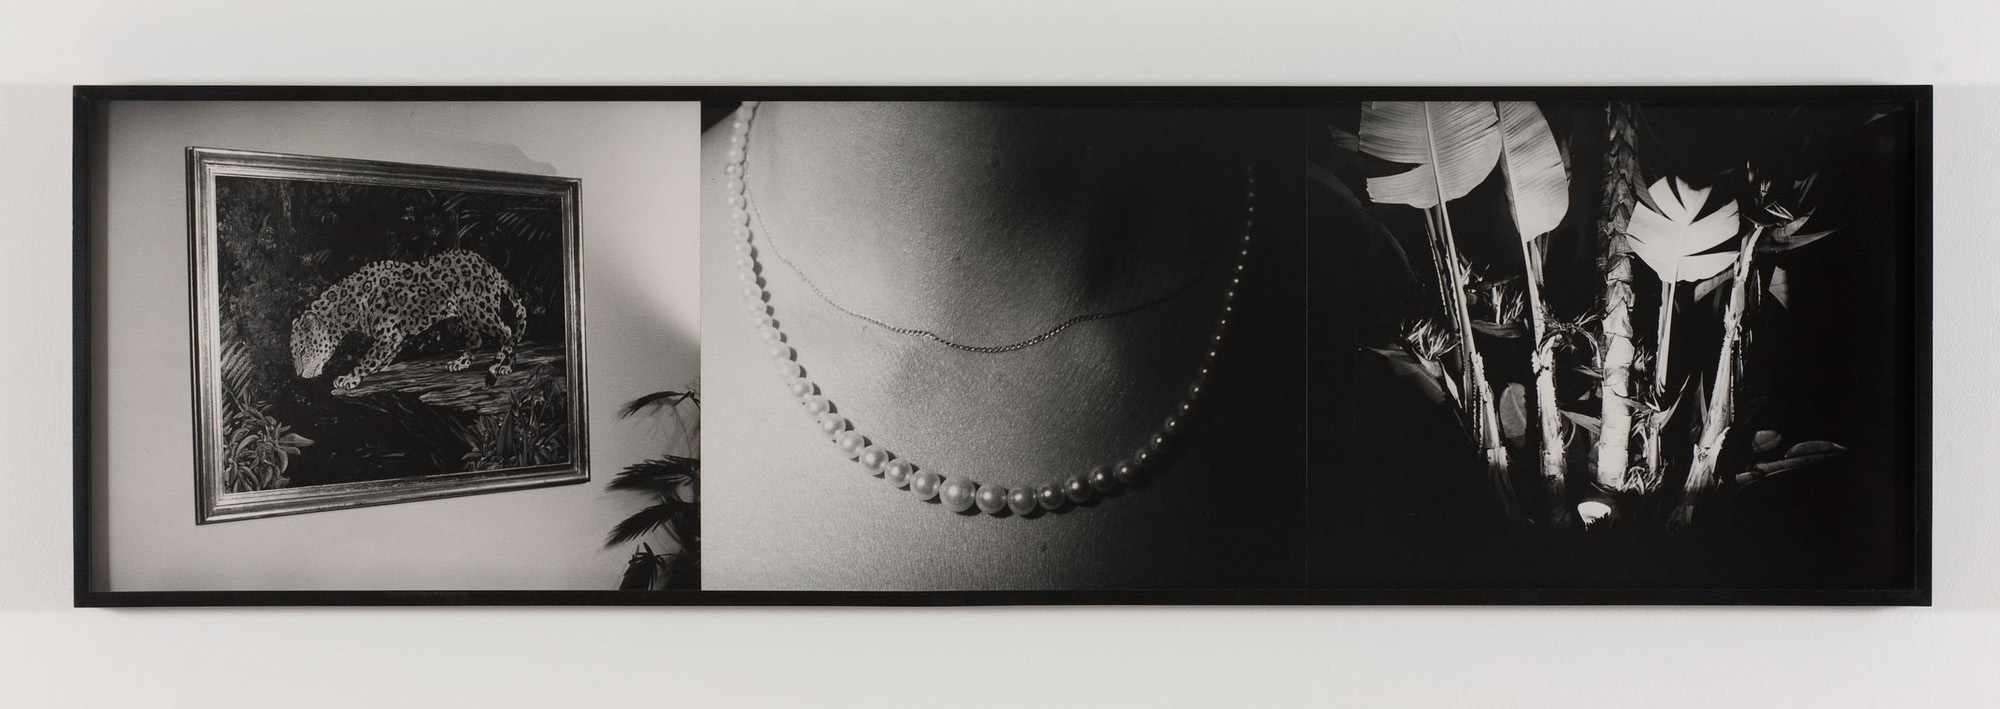 William Leavitt, <em>The Tropics</em>, 1974. Three black and white photographs, 15-1/2 x 19-3/4 in each.